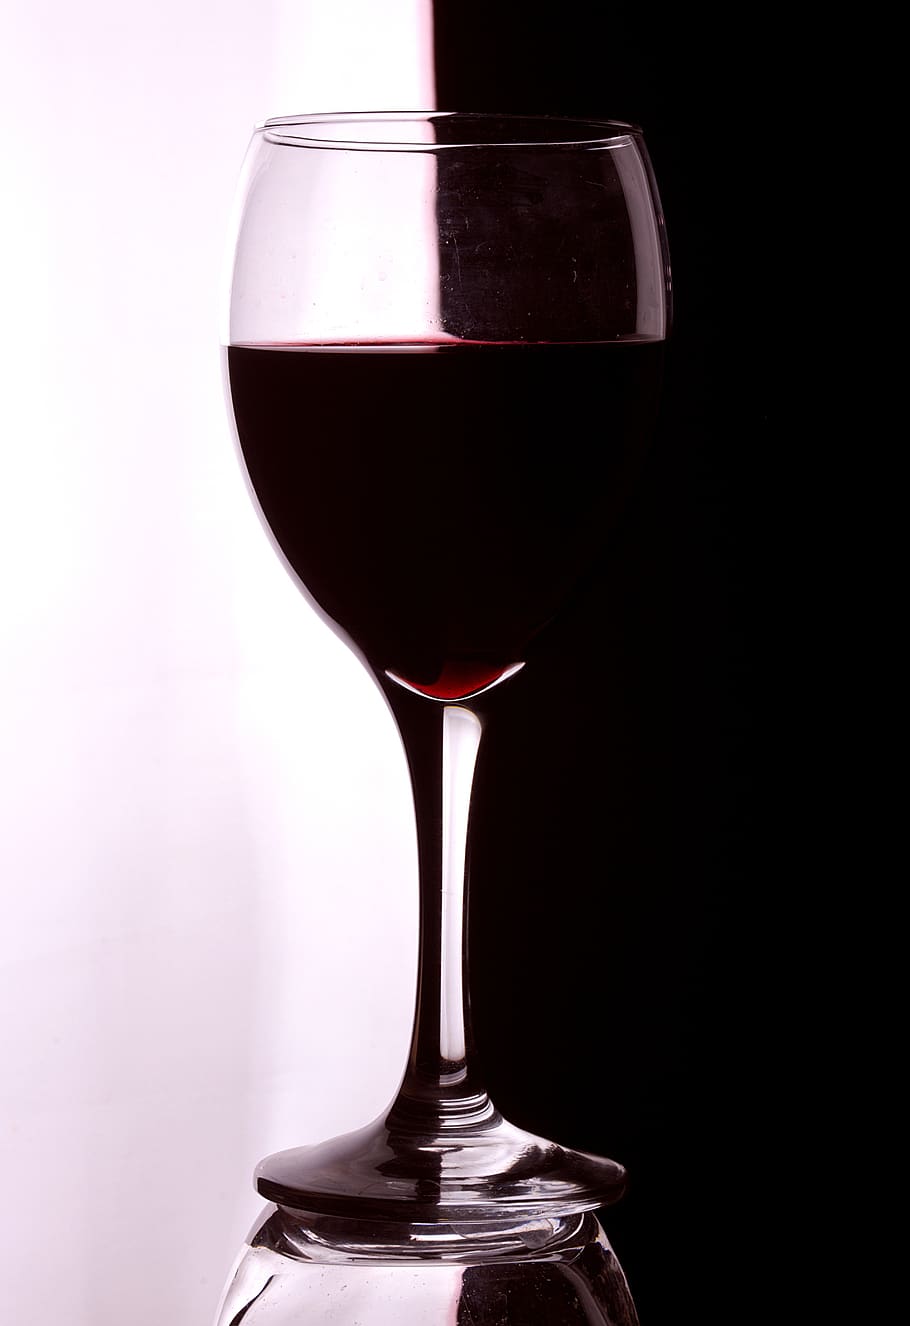 artistic, wine, glass, red, pattern, creative, simple, black, shape, drink